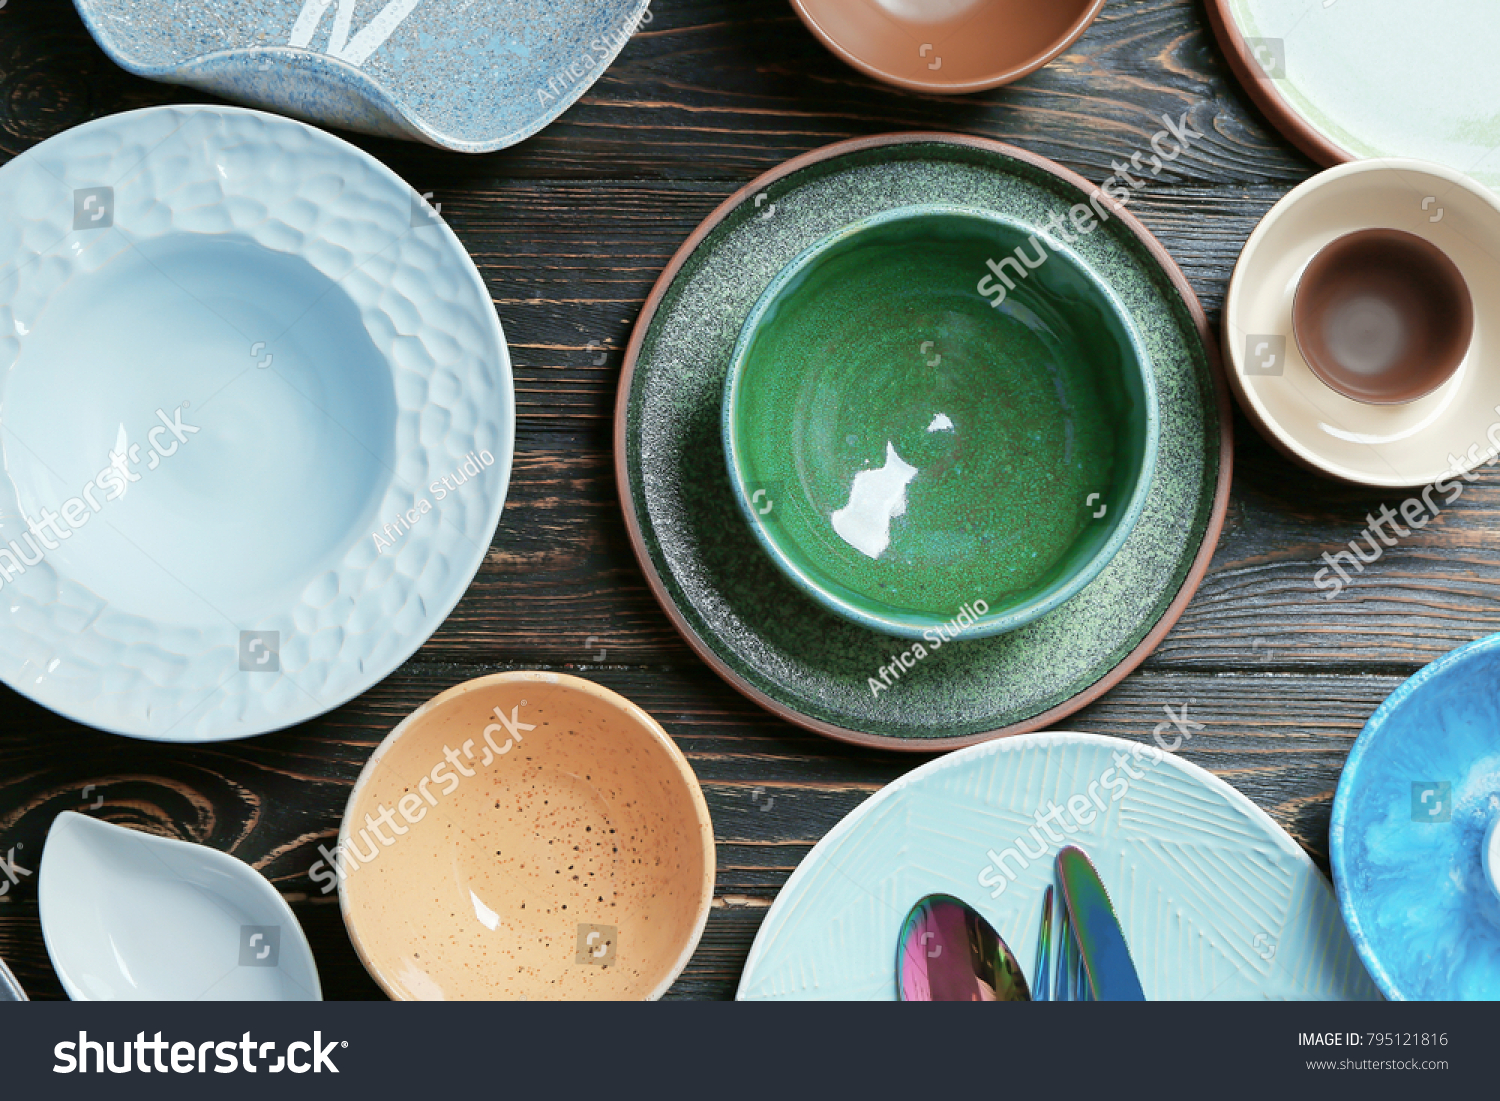 Ceramic tableware on wooden background #795121816